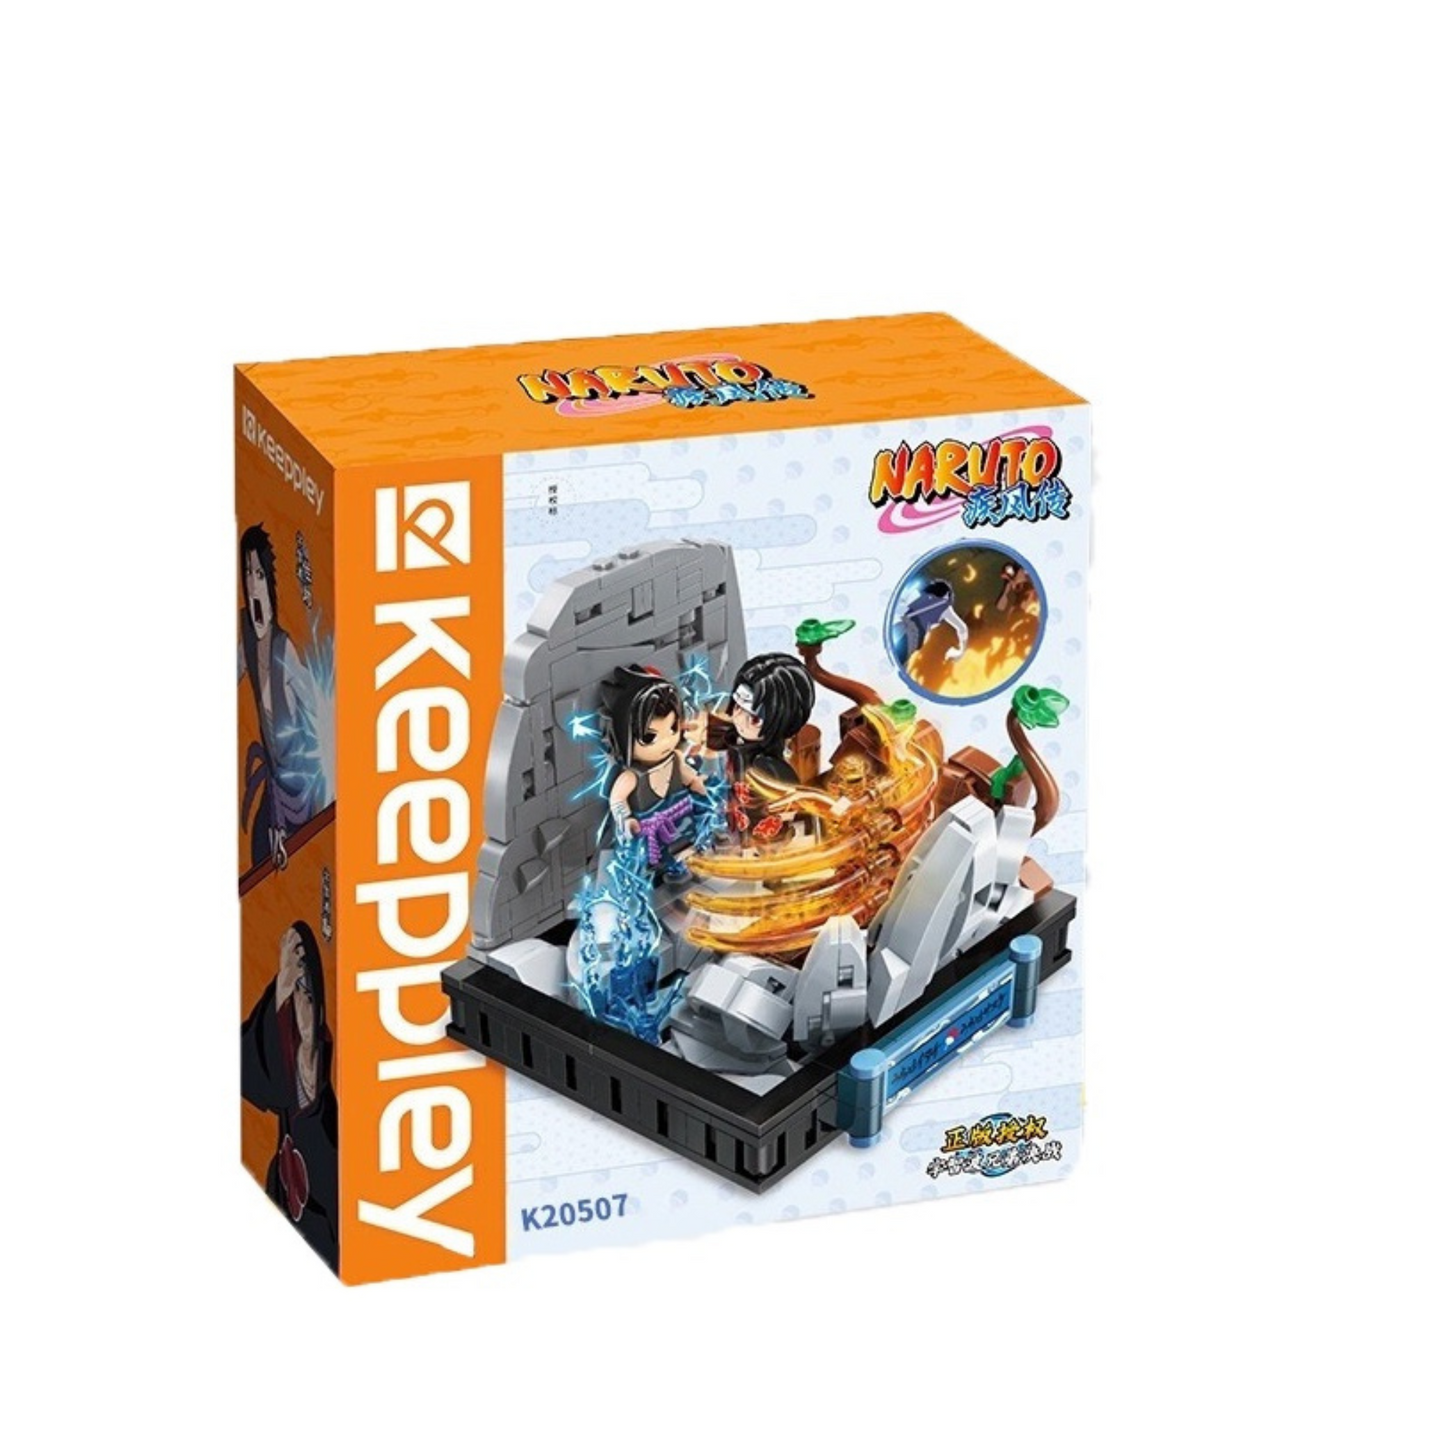 Keeppley X Uchiha Brothers Decisive Battle Building Blocks Toy Set